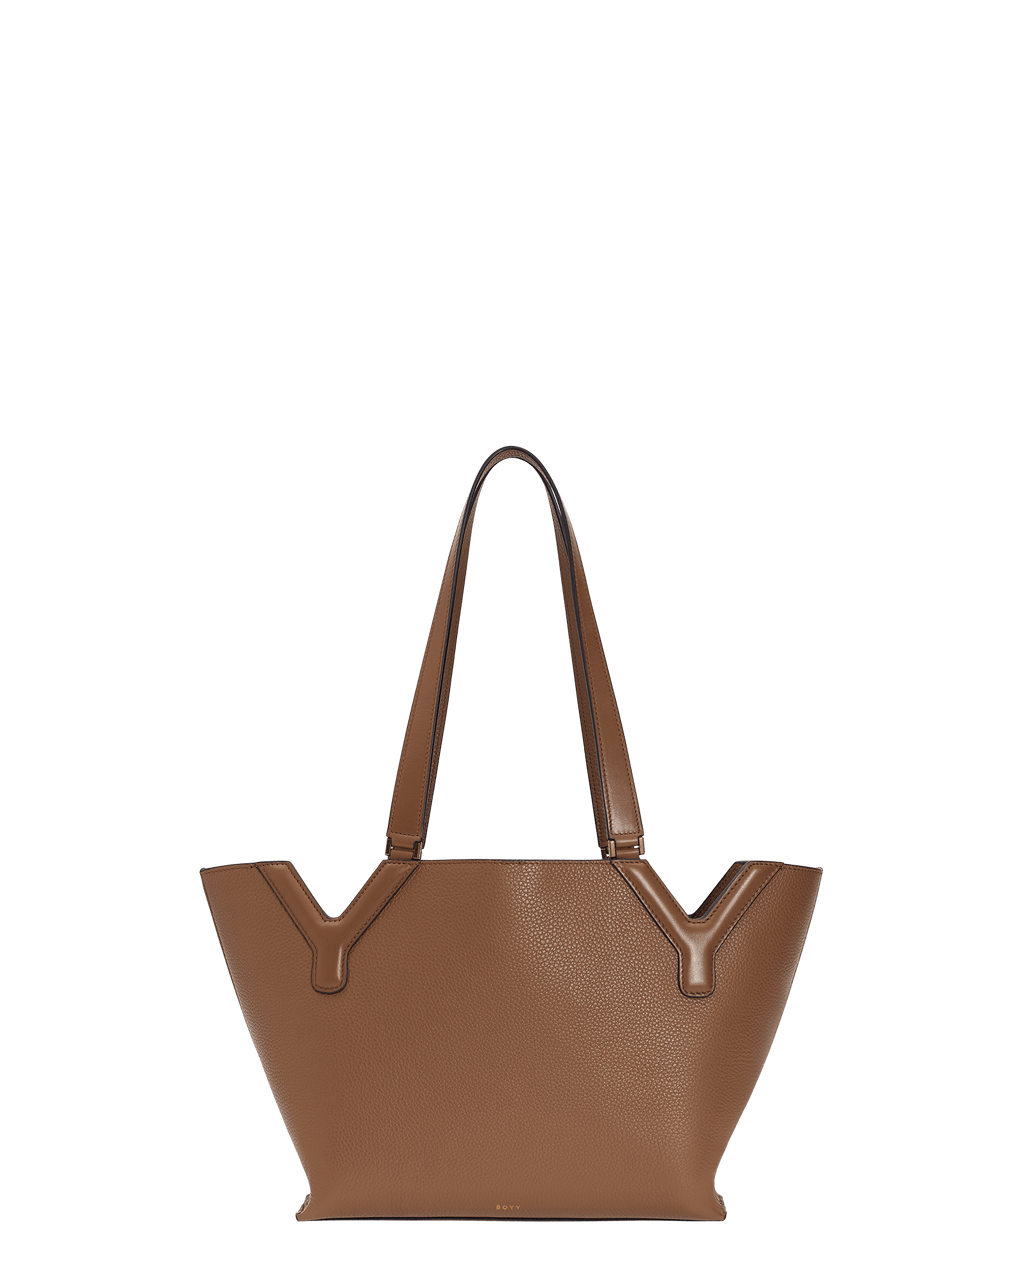 23 Years Hot Sale Genuine Luxury Replica Women's Handbag Tote Bag